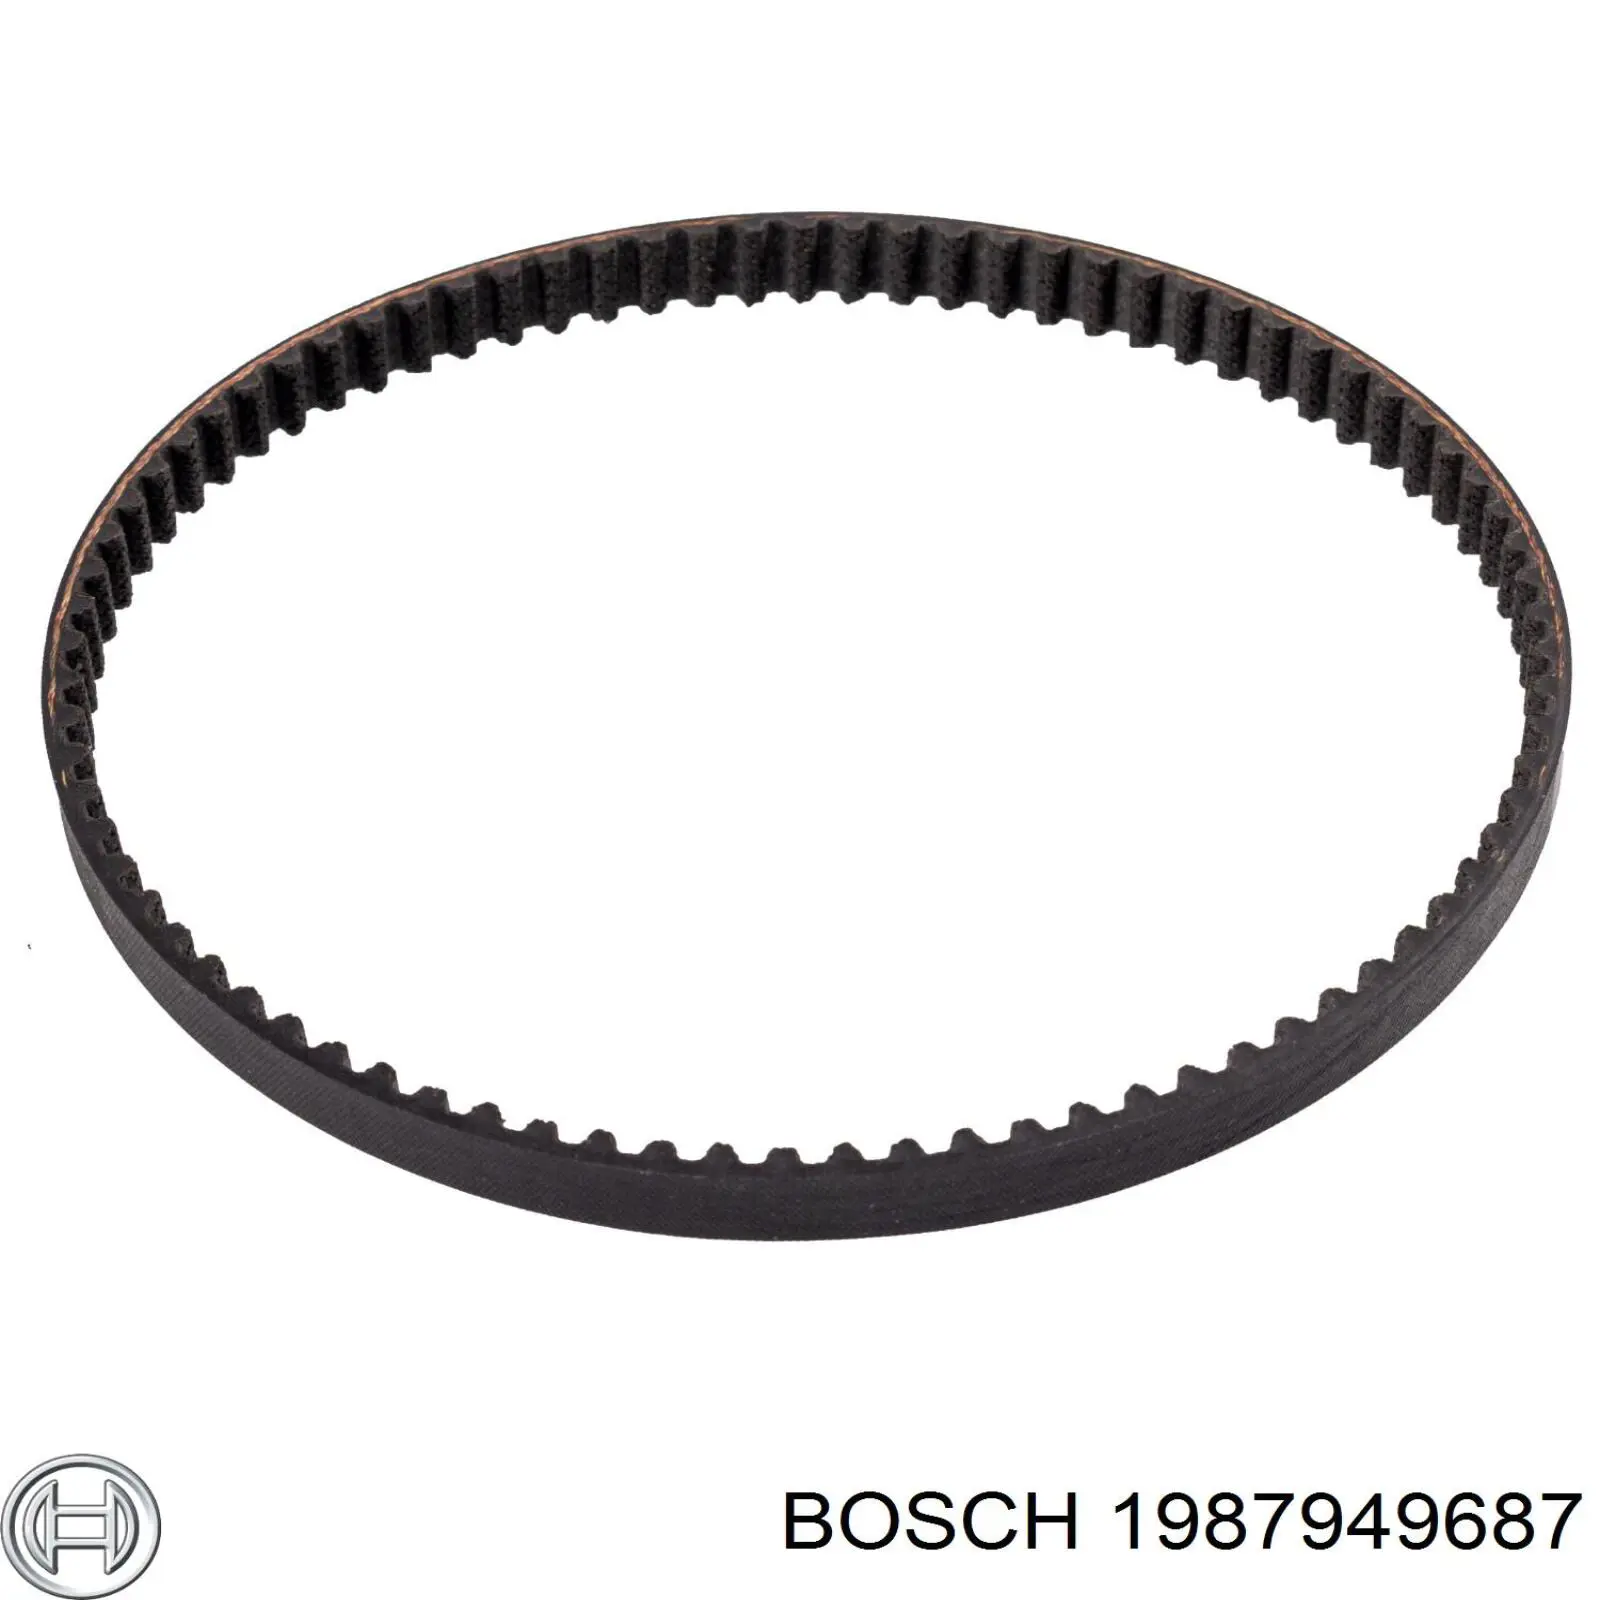 1987949687 Bosch correa trapezoidal